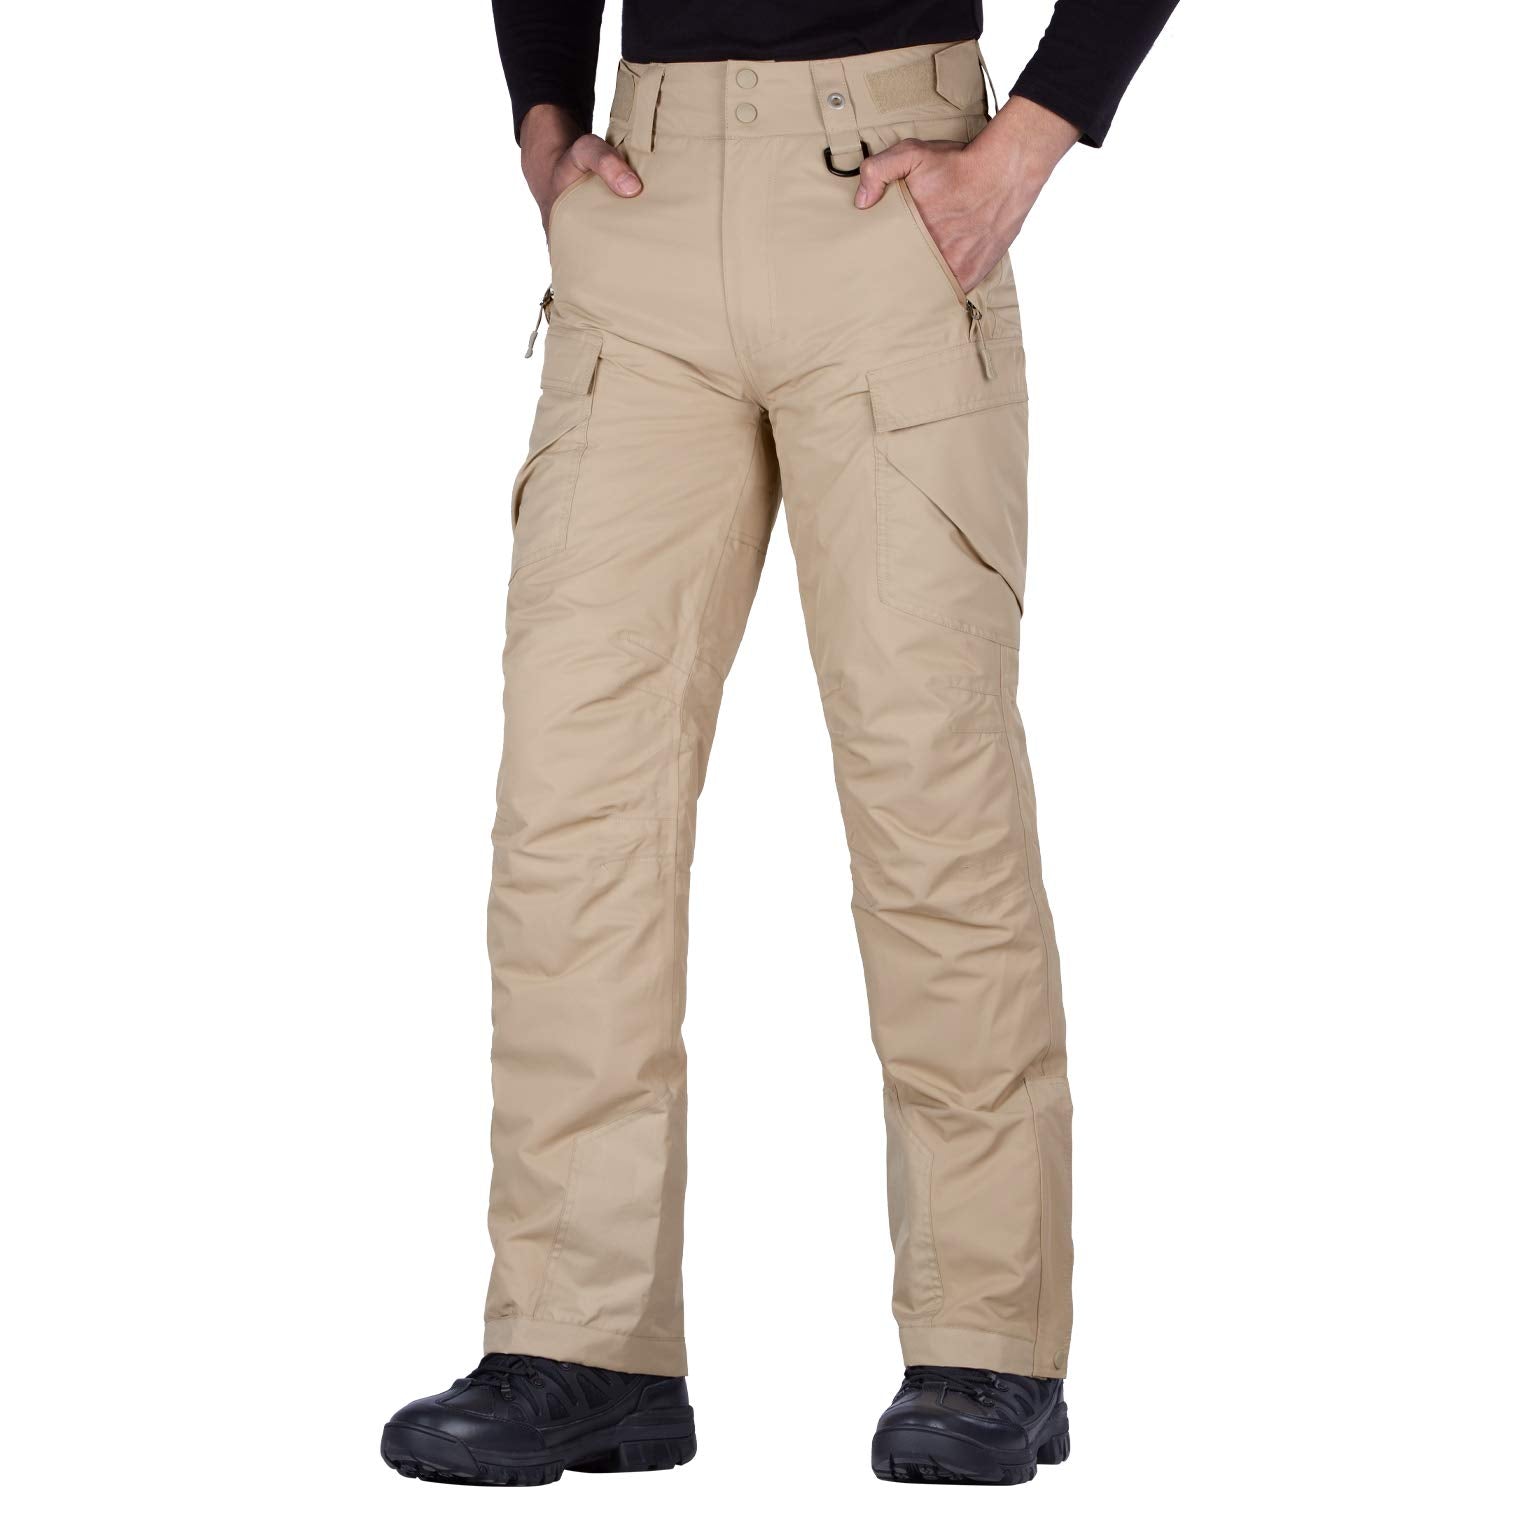 Men's Waterproof Ski Insulated Pants